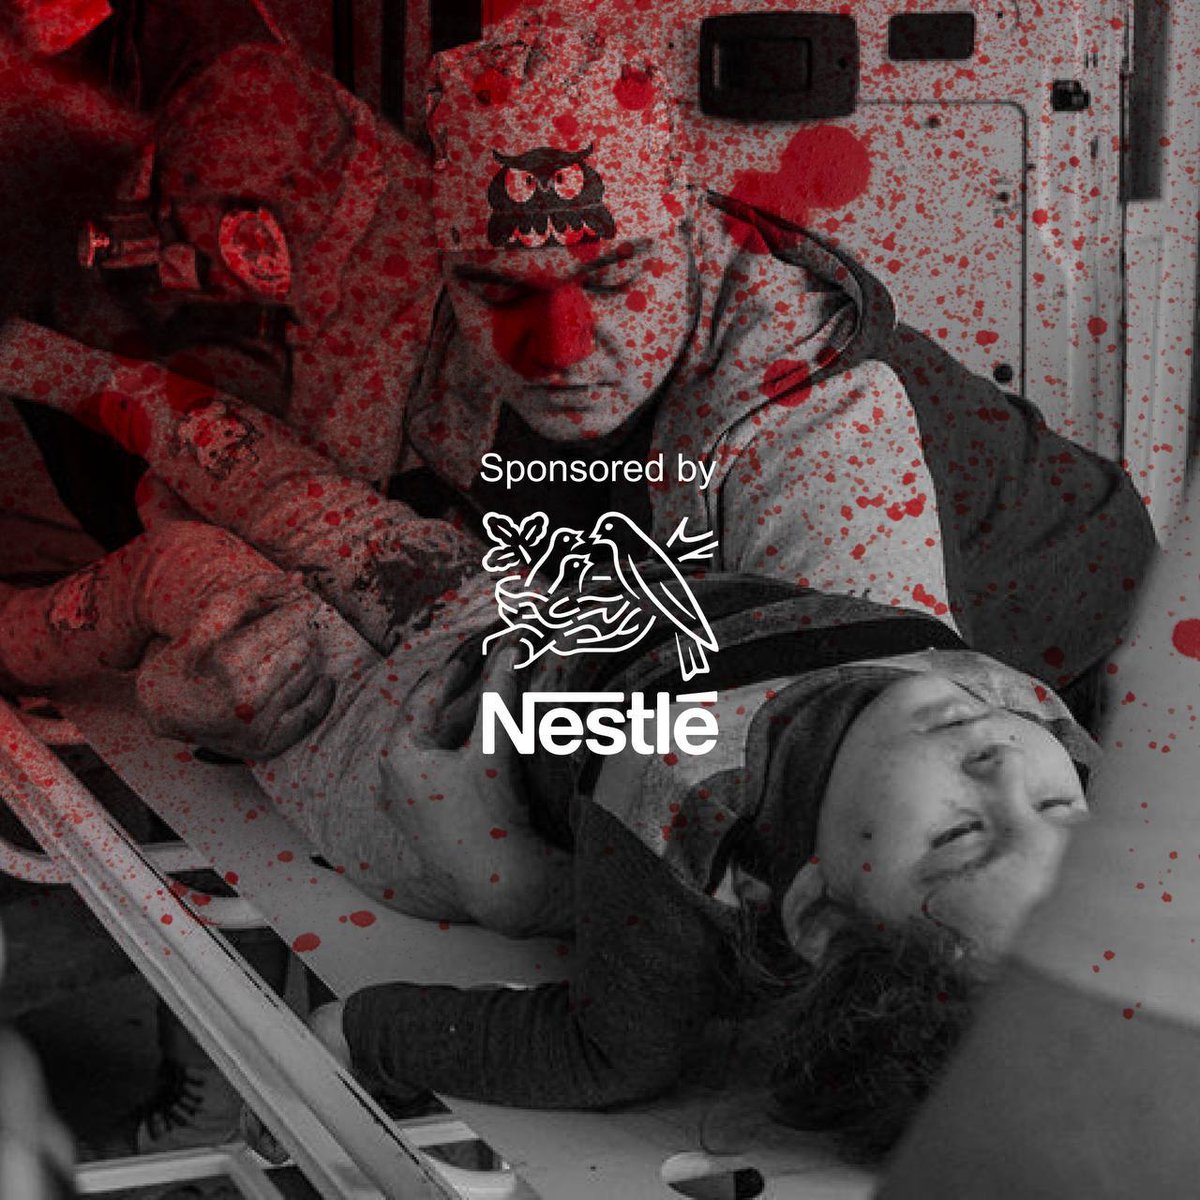 #Nestle is a sponsor of terrorussia
#RussiaInvadedUkraine #NestleBoycott  #Ukraine️